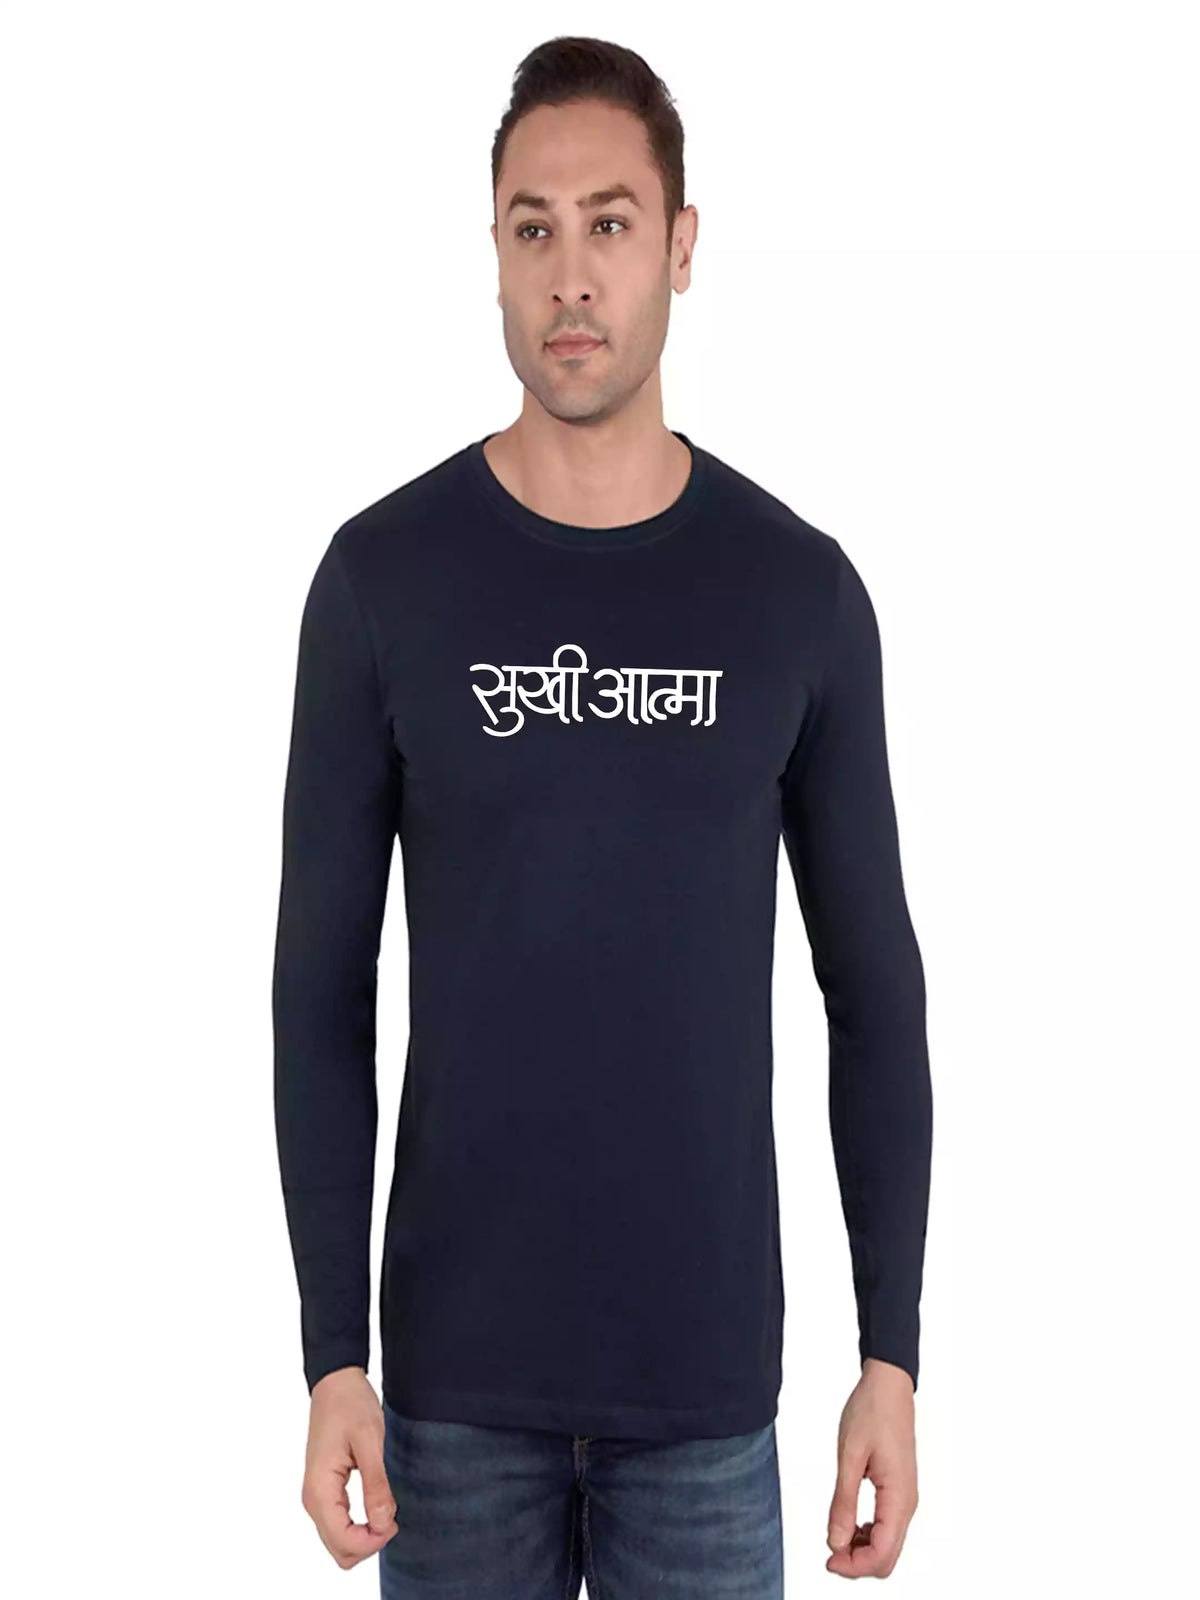 Sukhiaatma Full Sleeves NB - Sukhiaatma Unisex Marathi Graphic Printed T-shirt